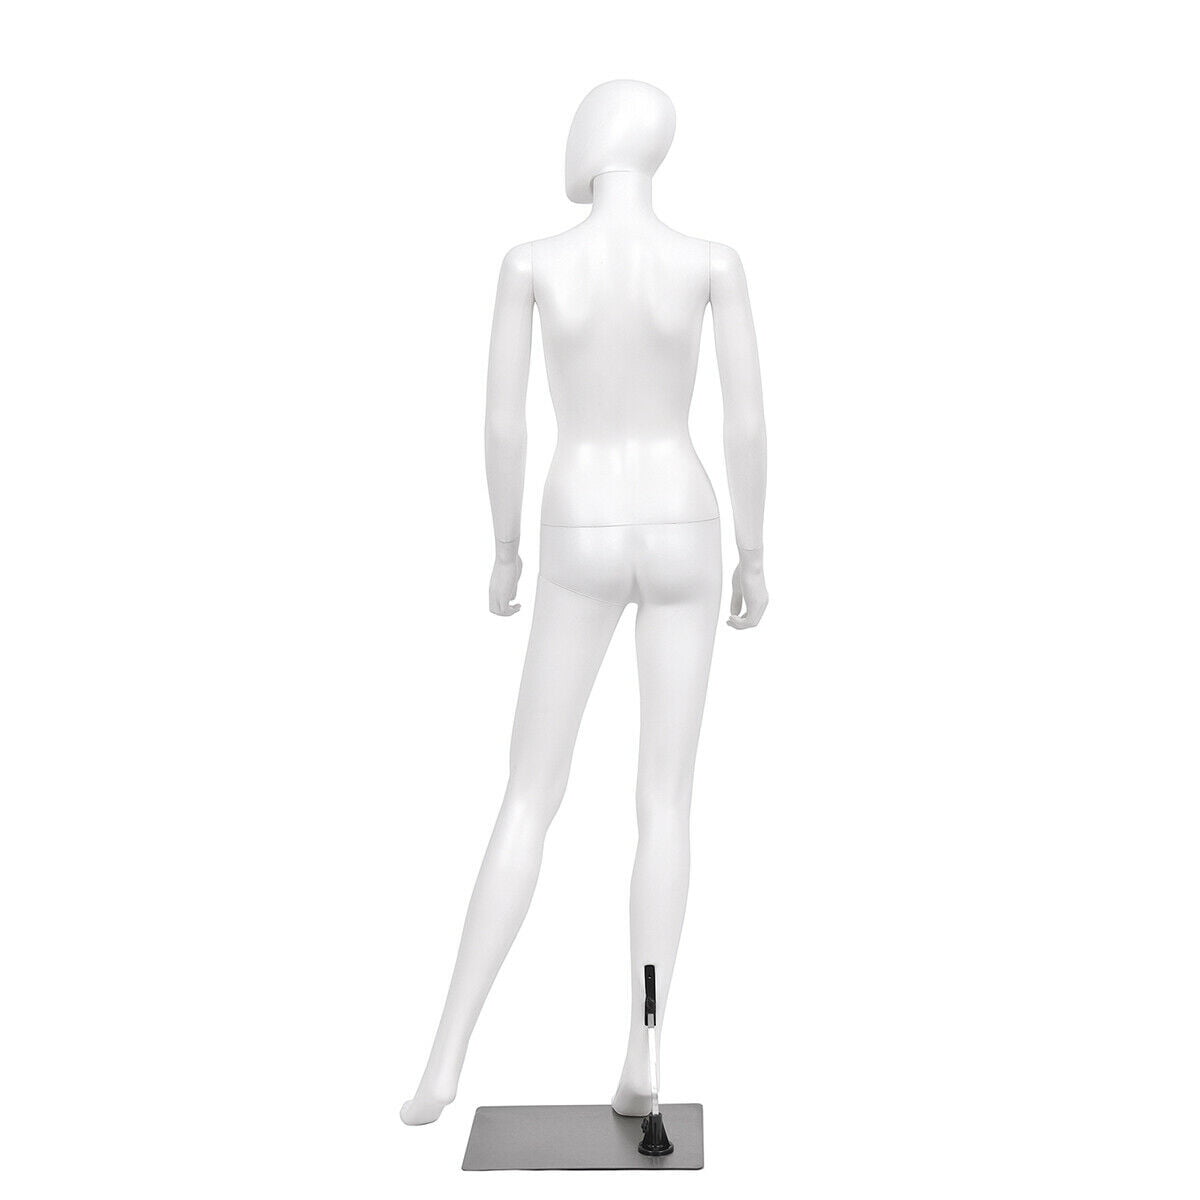 5.8 FT Female Mannequin Egghead Plastic Full Body Dress Form Display w/Base